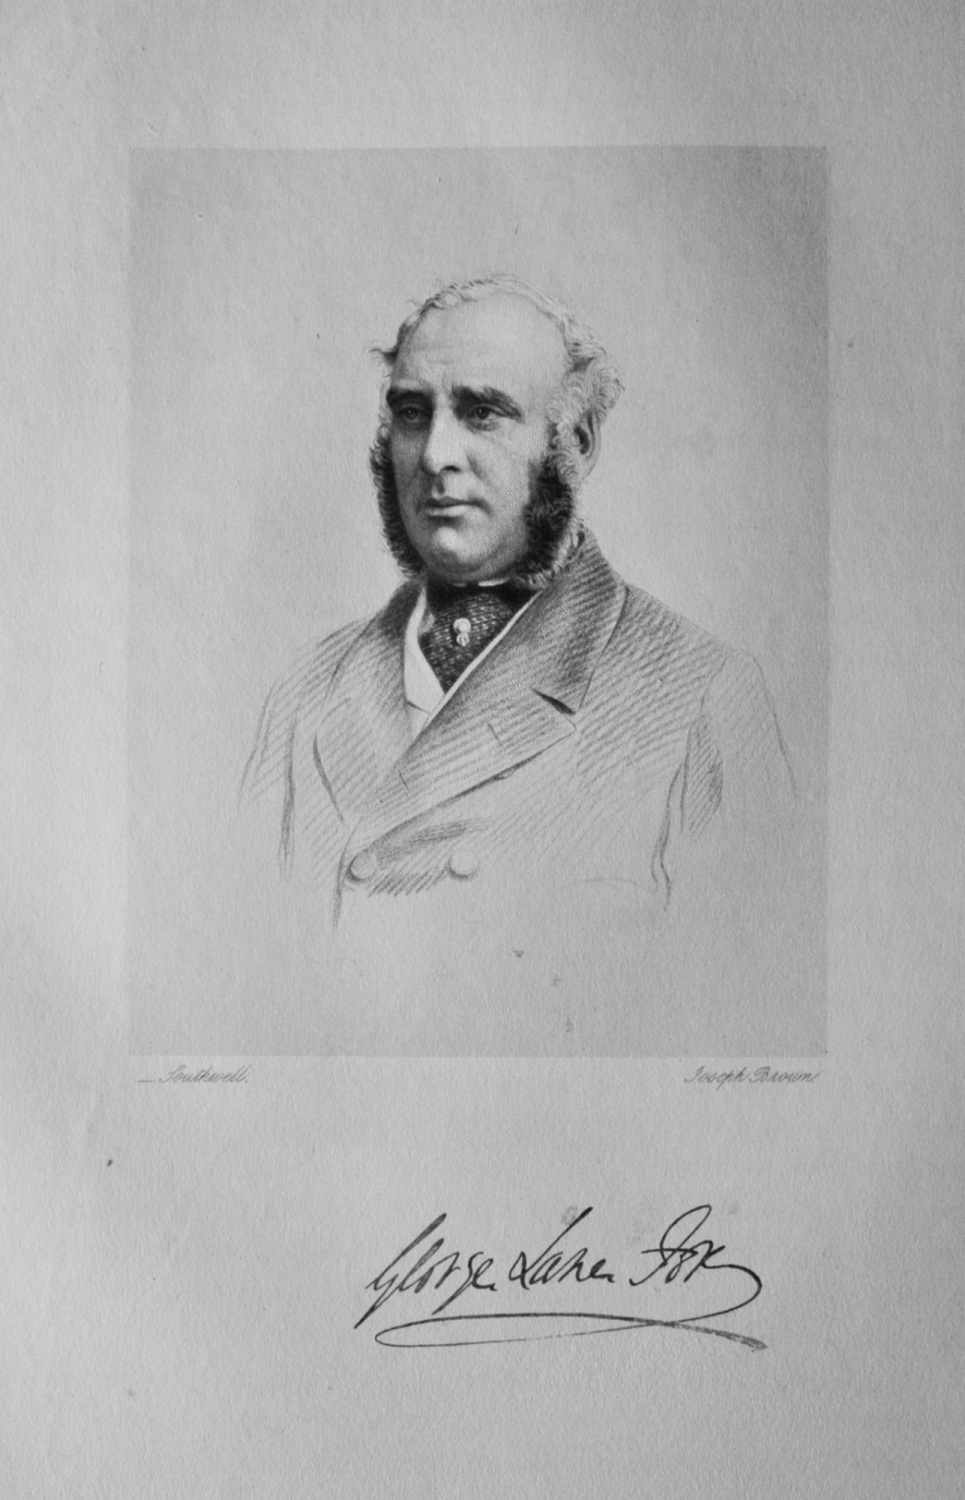 Mr. George Lane-Fox. 1816 - 1896.  (Master of Hounds.)